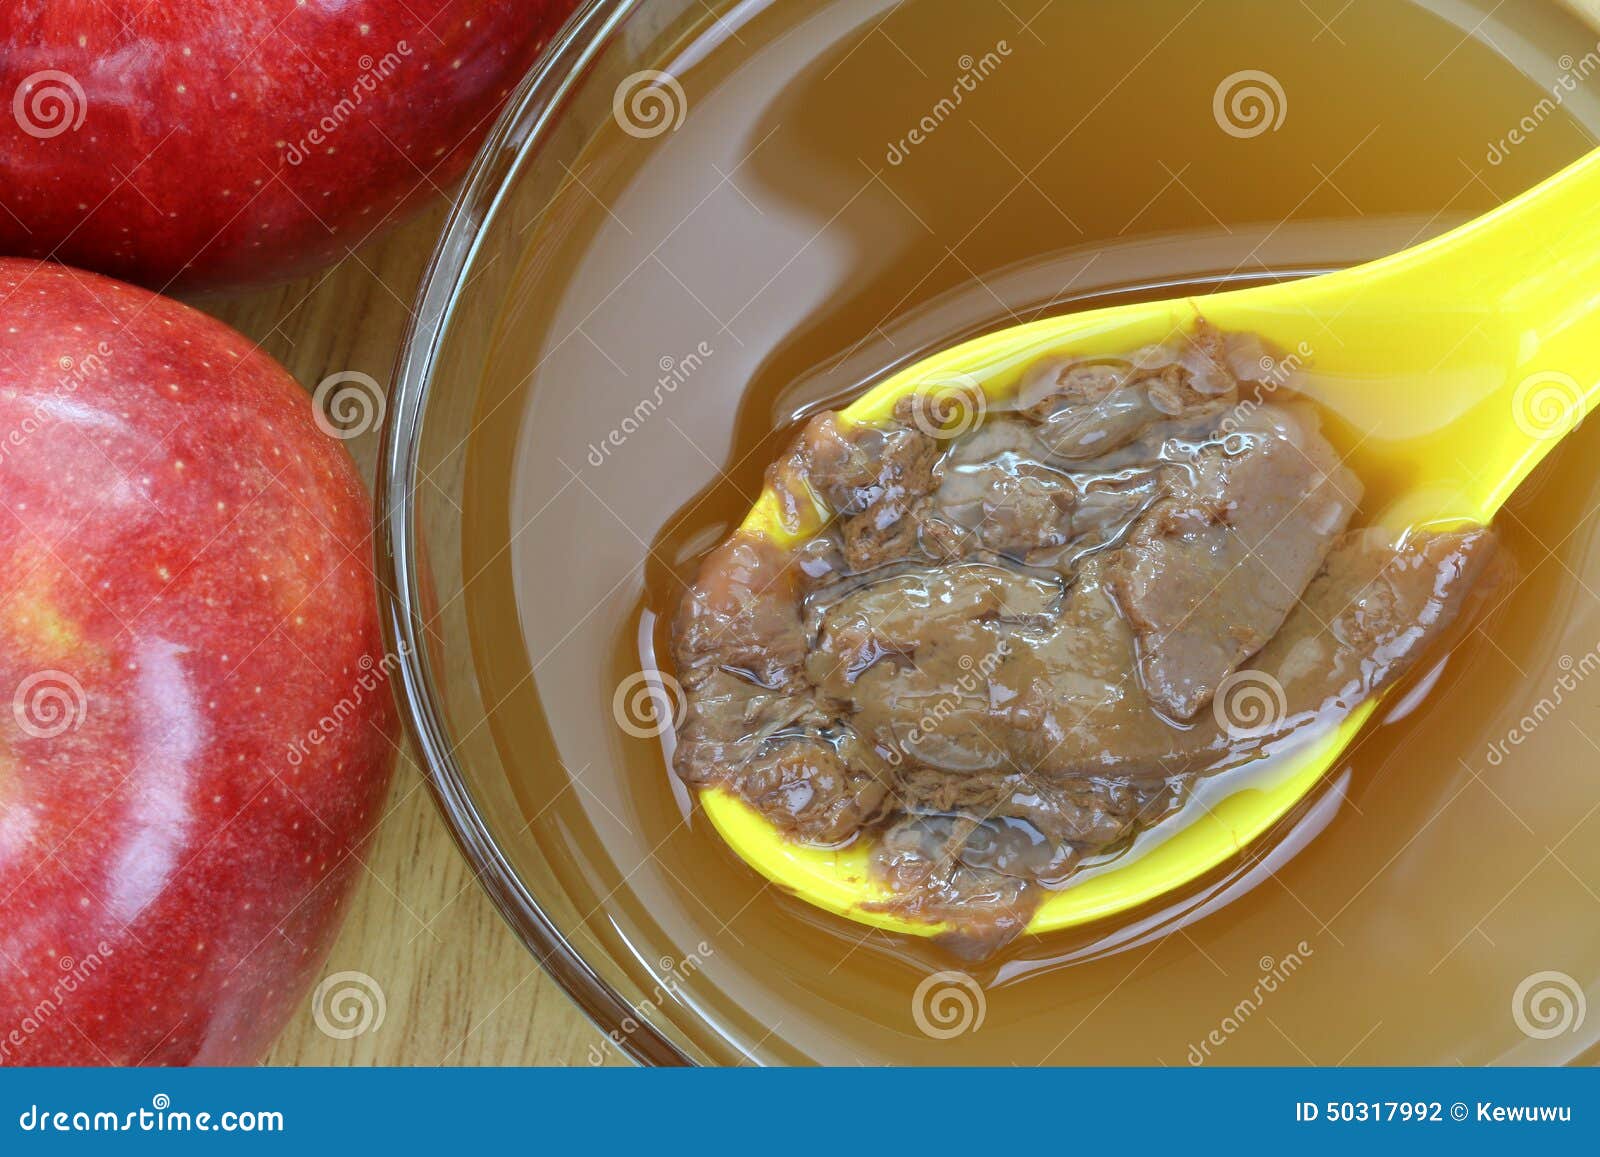 mother enzymes on a bowl of apple cider vinegar